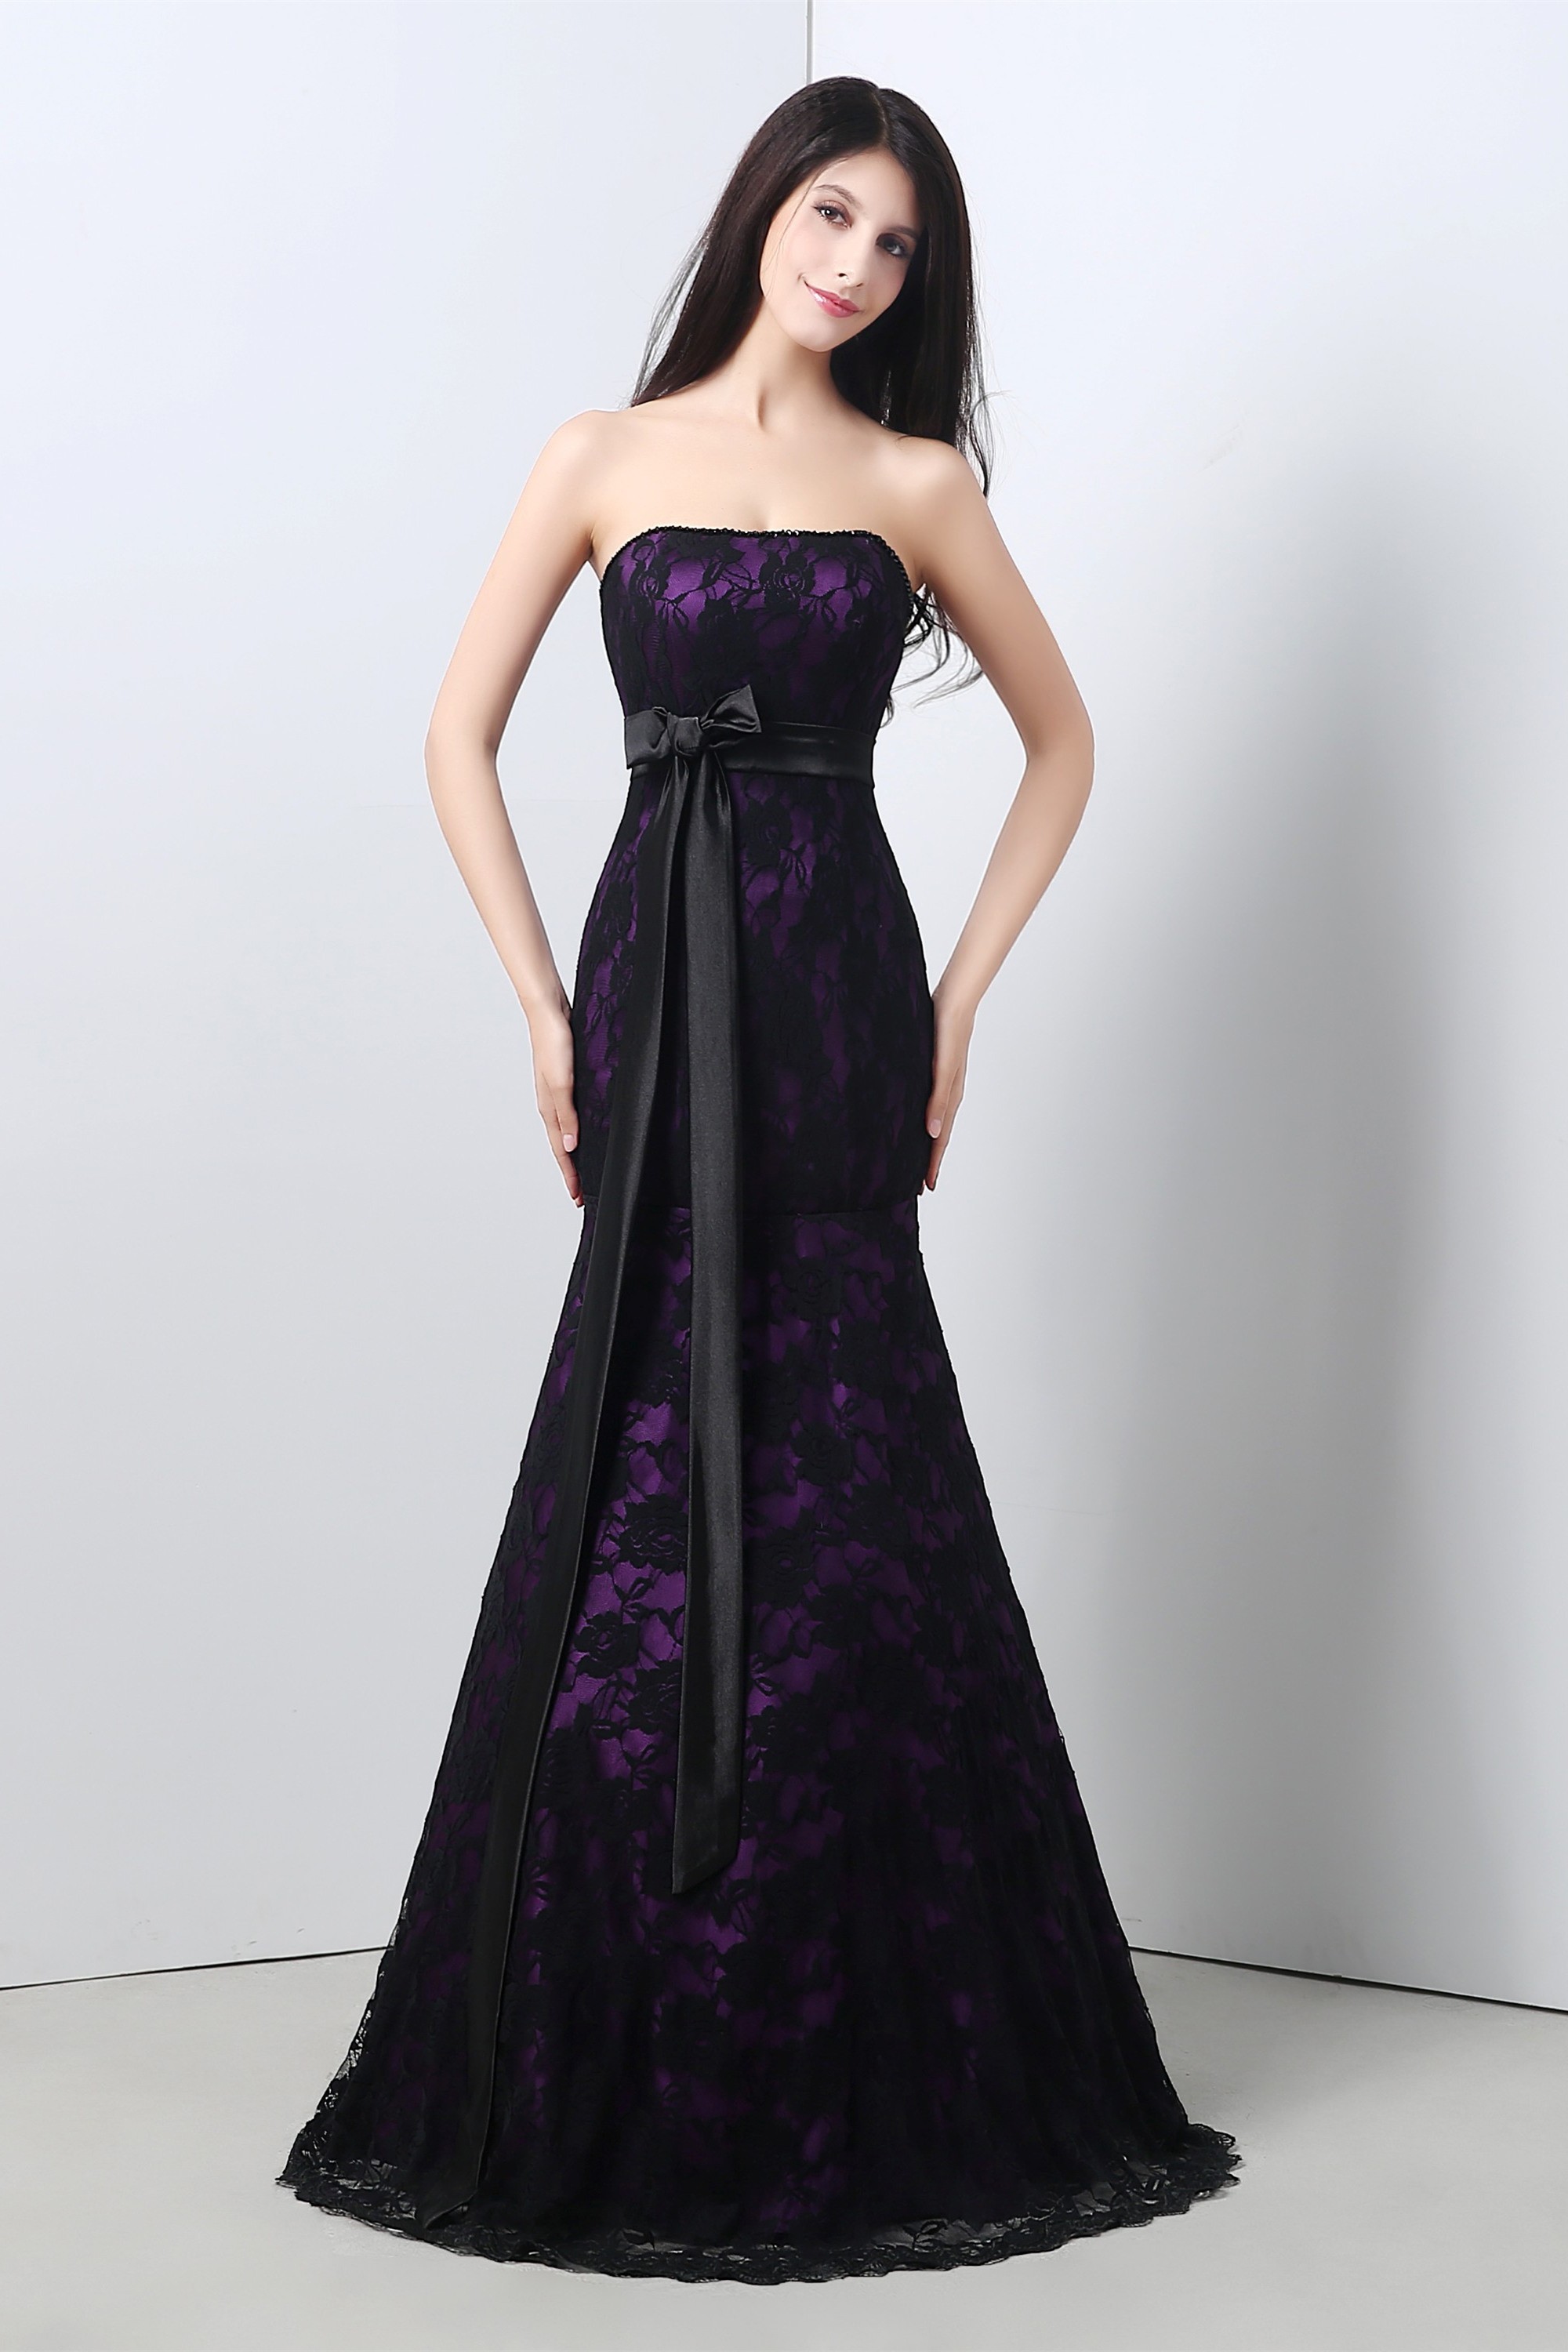 purple and black dress,Quality ...